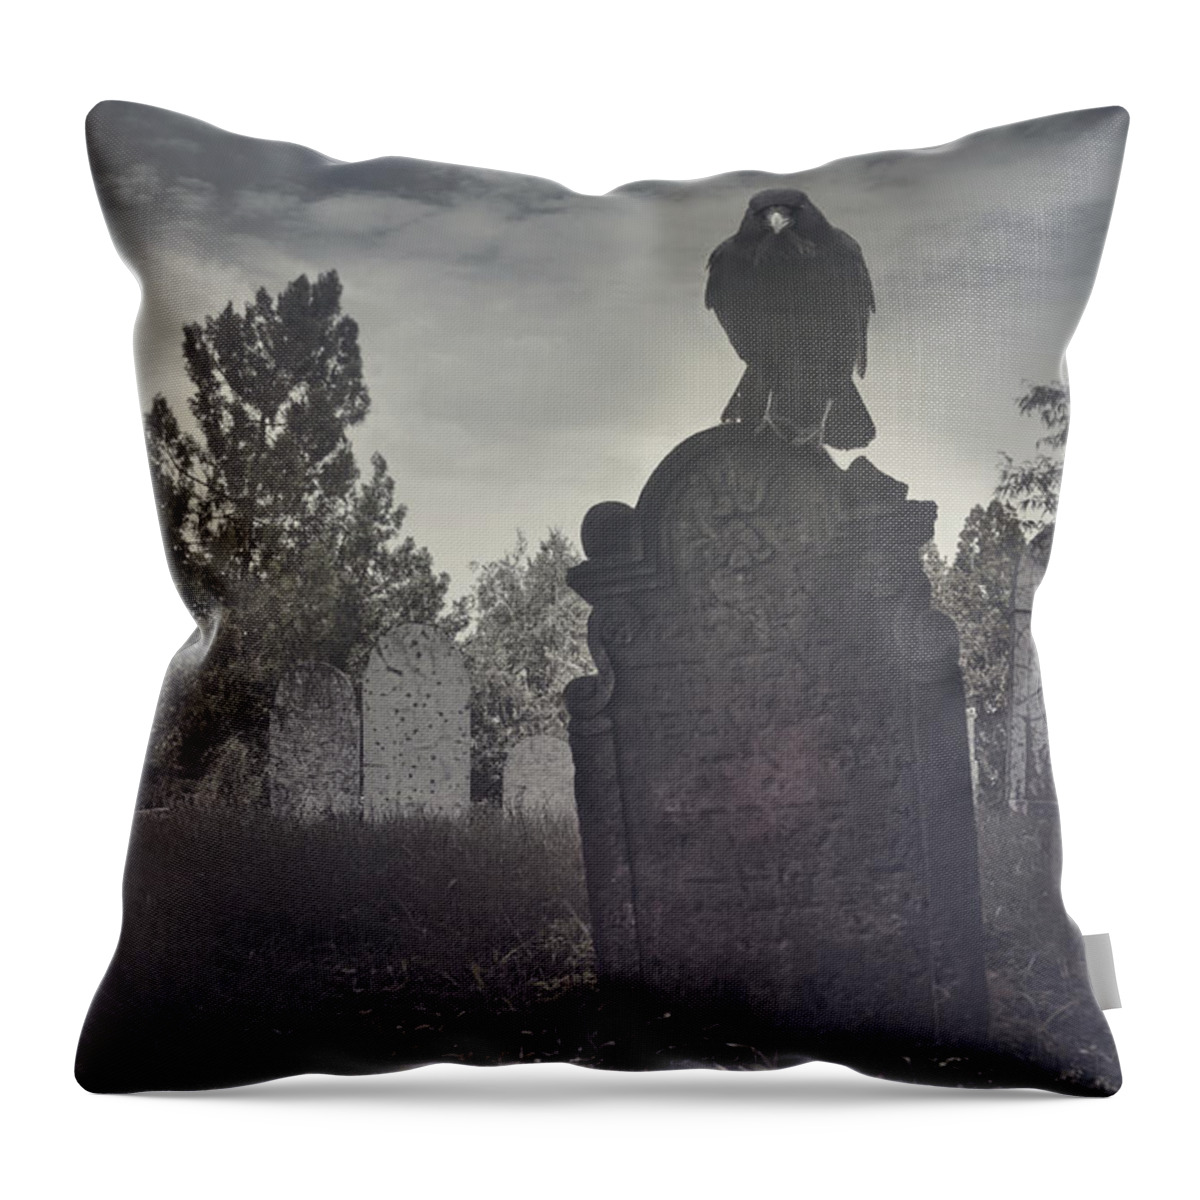 Graveyard Throw Pillow featuring the photograph Graveyard by Jelena Jovanovic